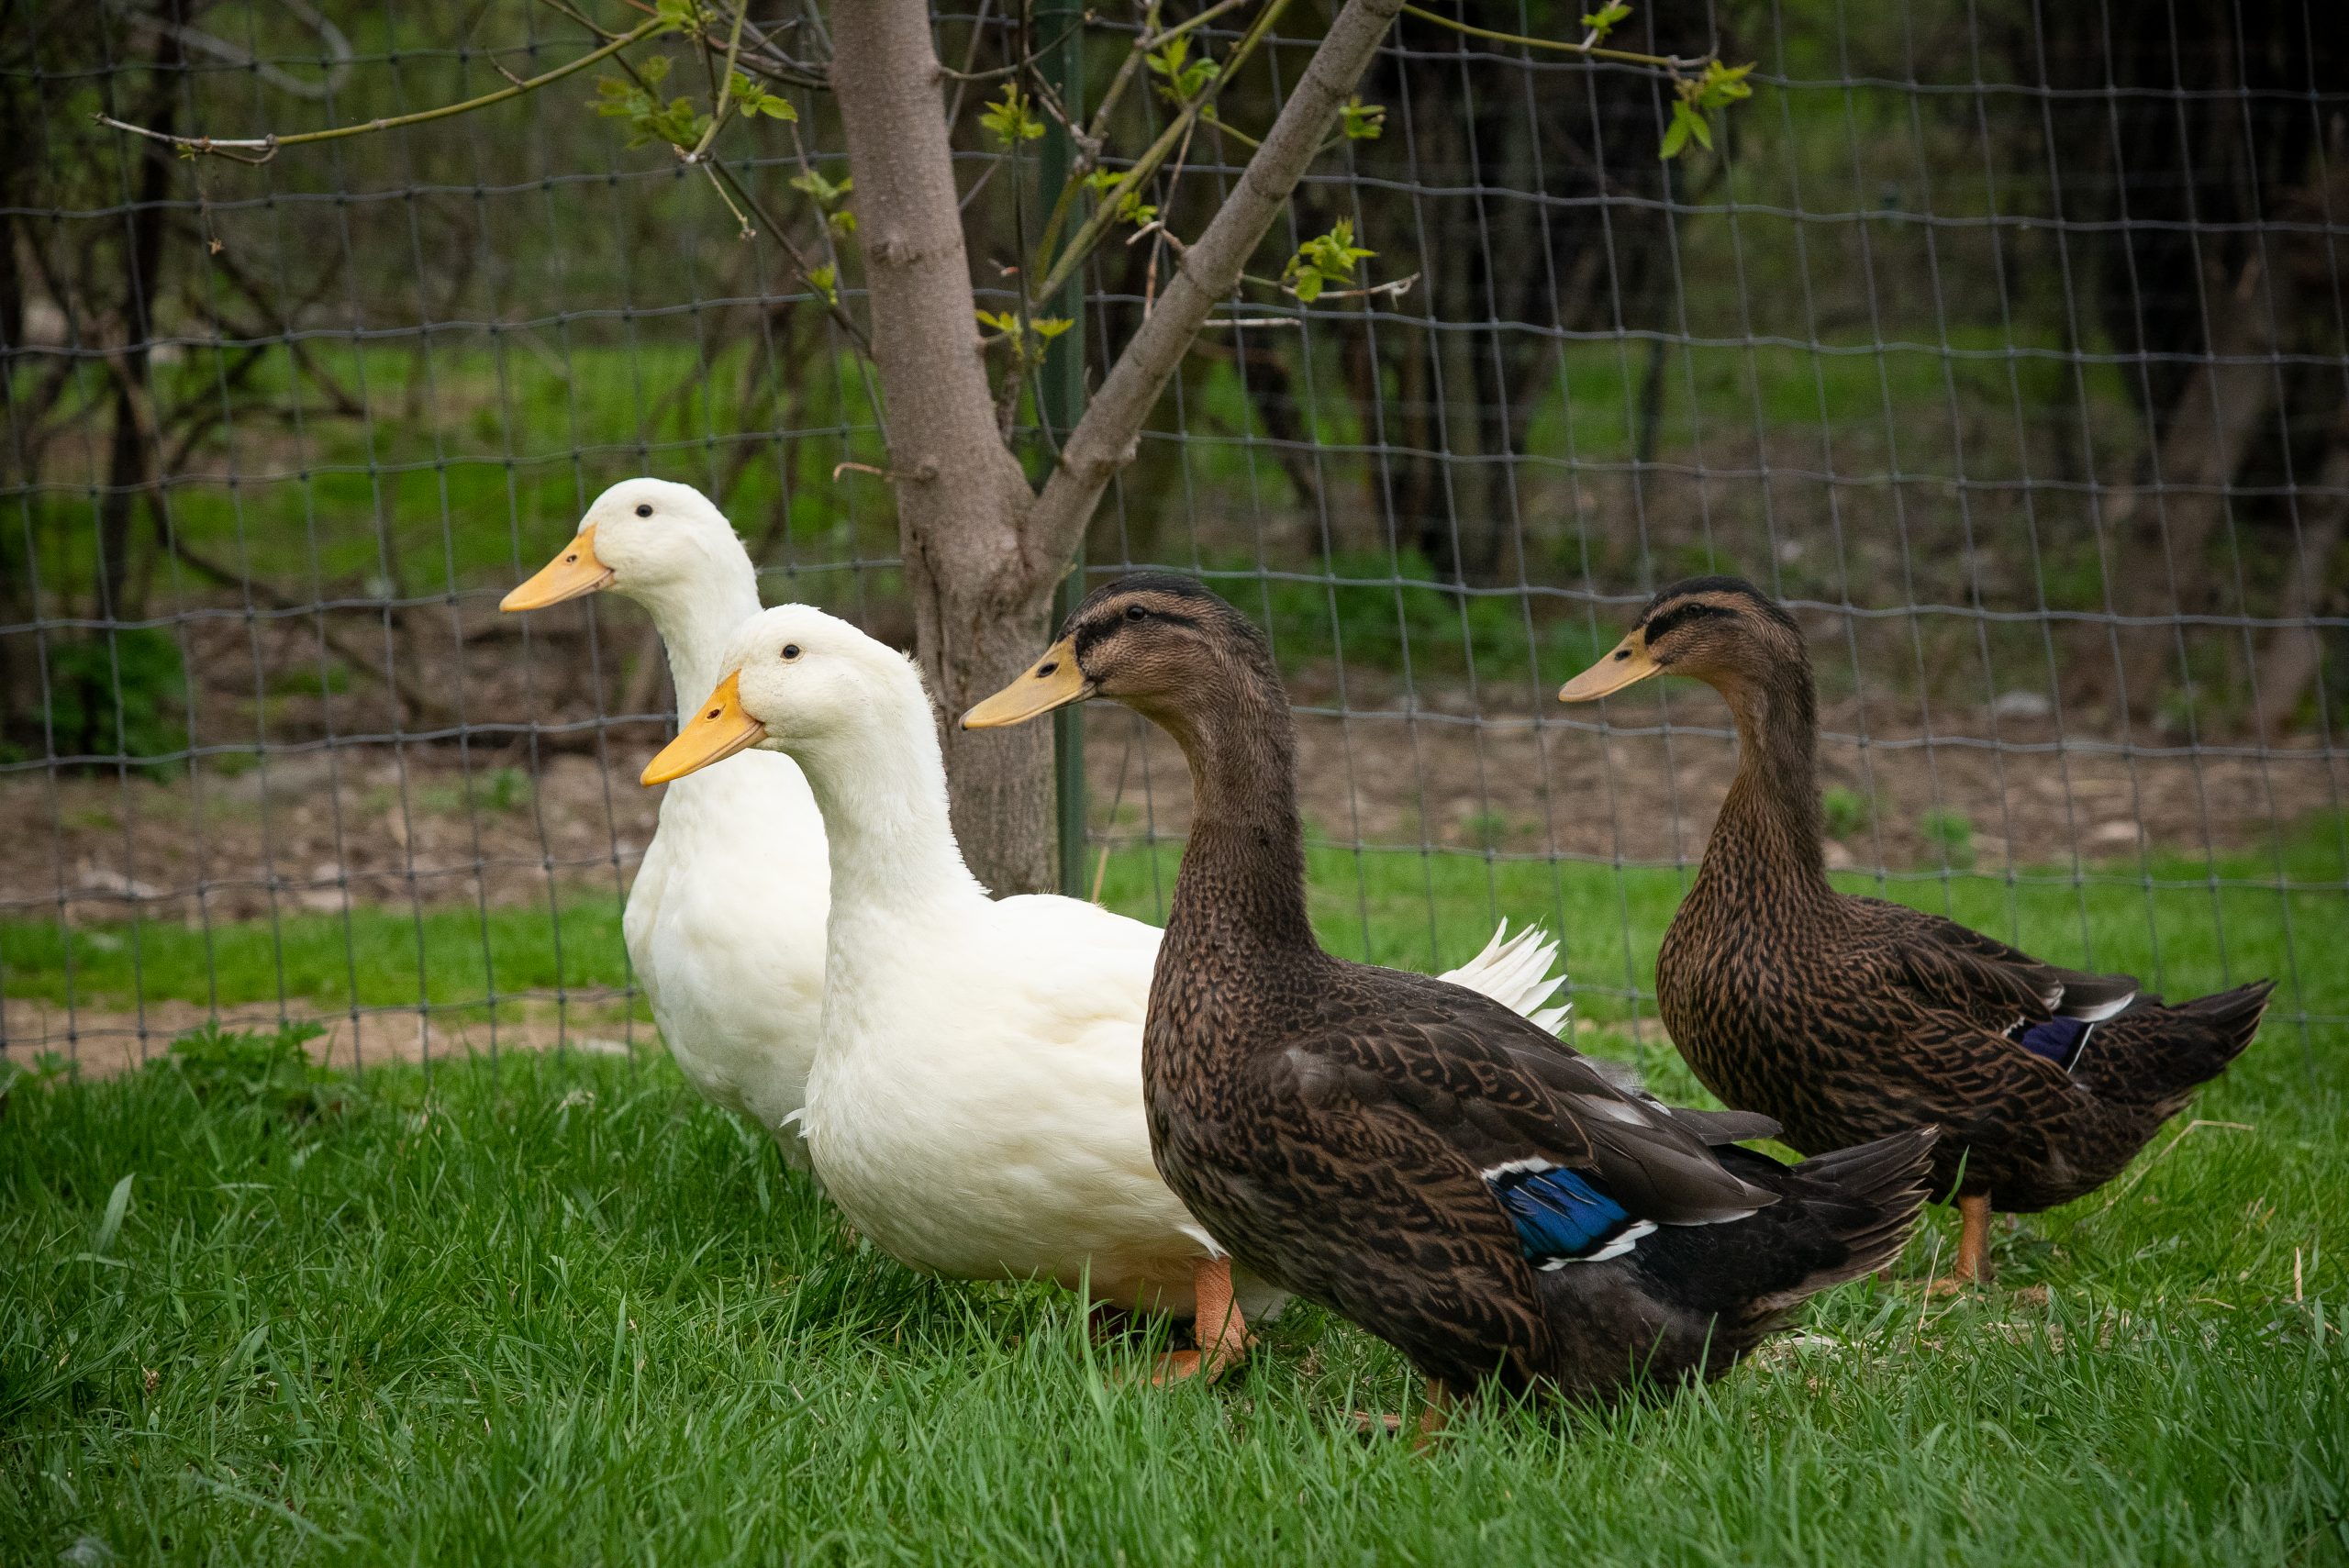 Rad, Dobie, Milo, and Macka ducks explore the grass at Sanctuary